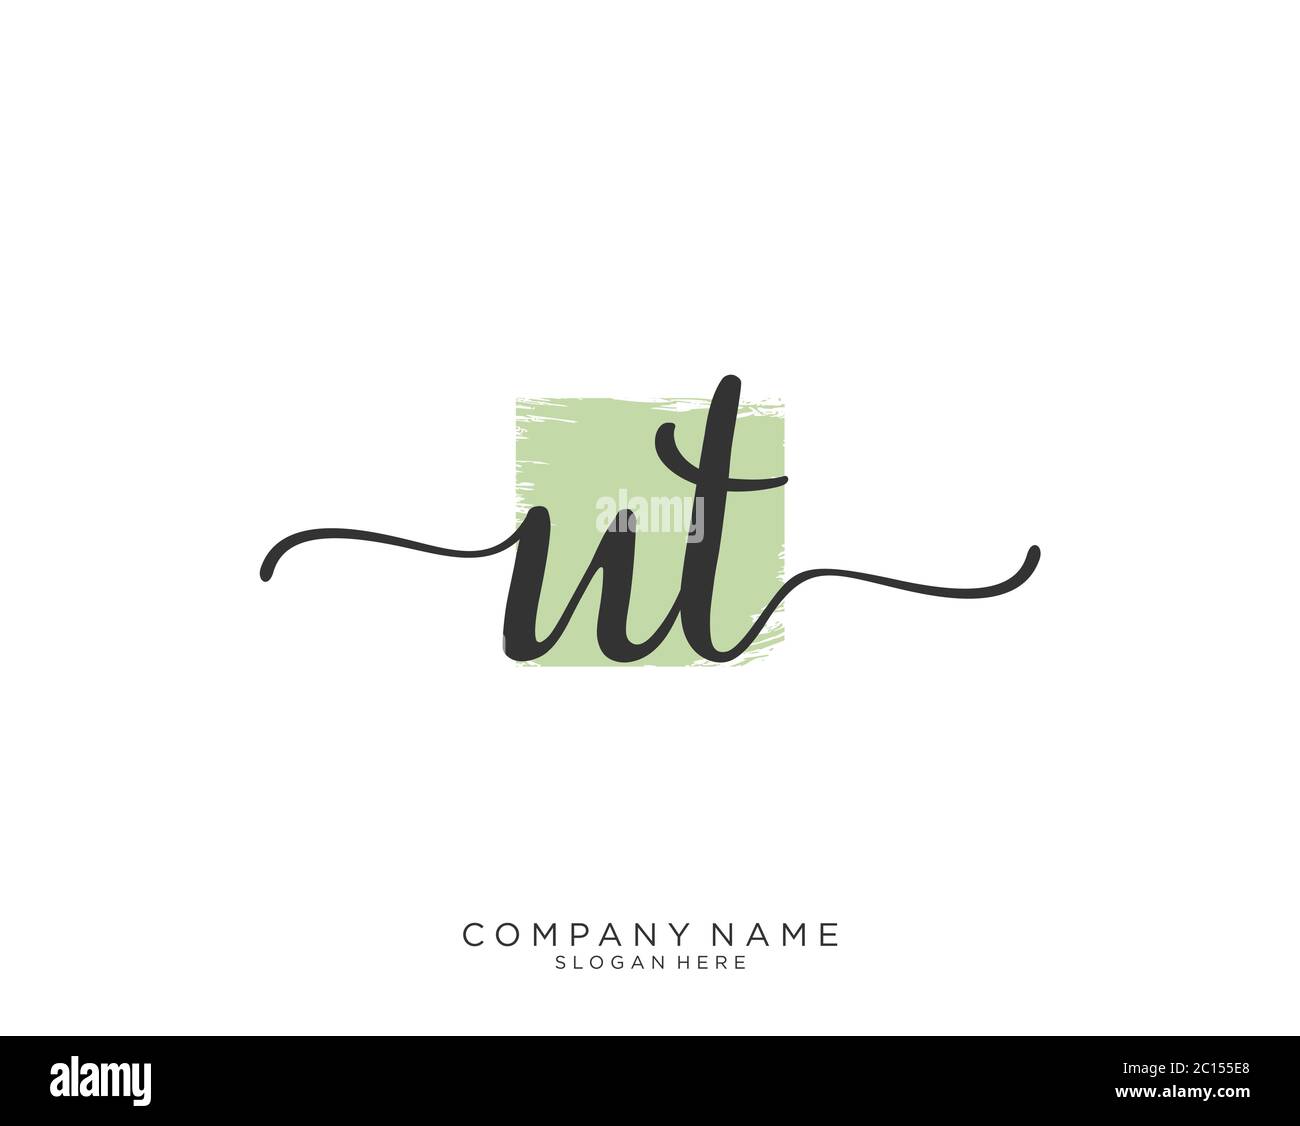 UT Initial handwriting logo vector Stock Vector